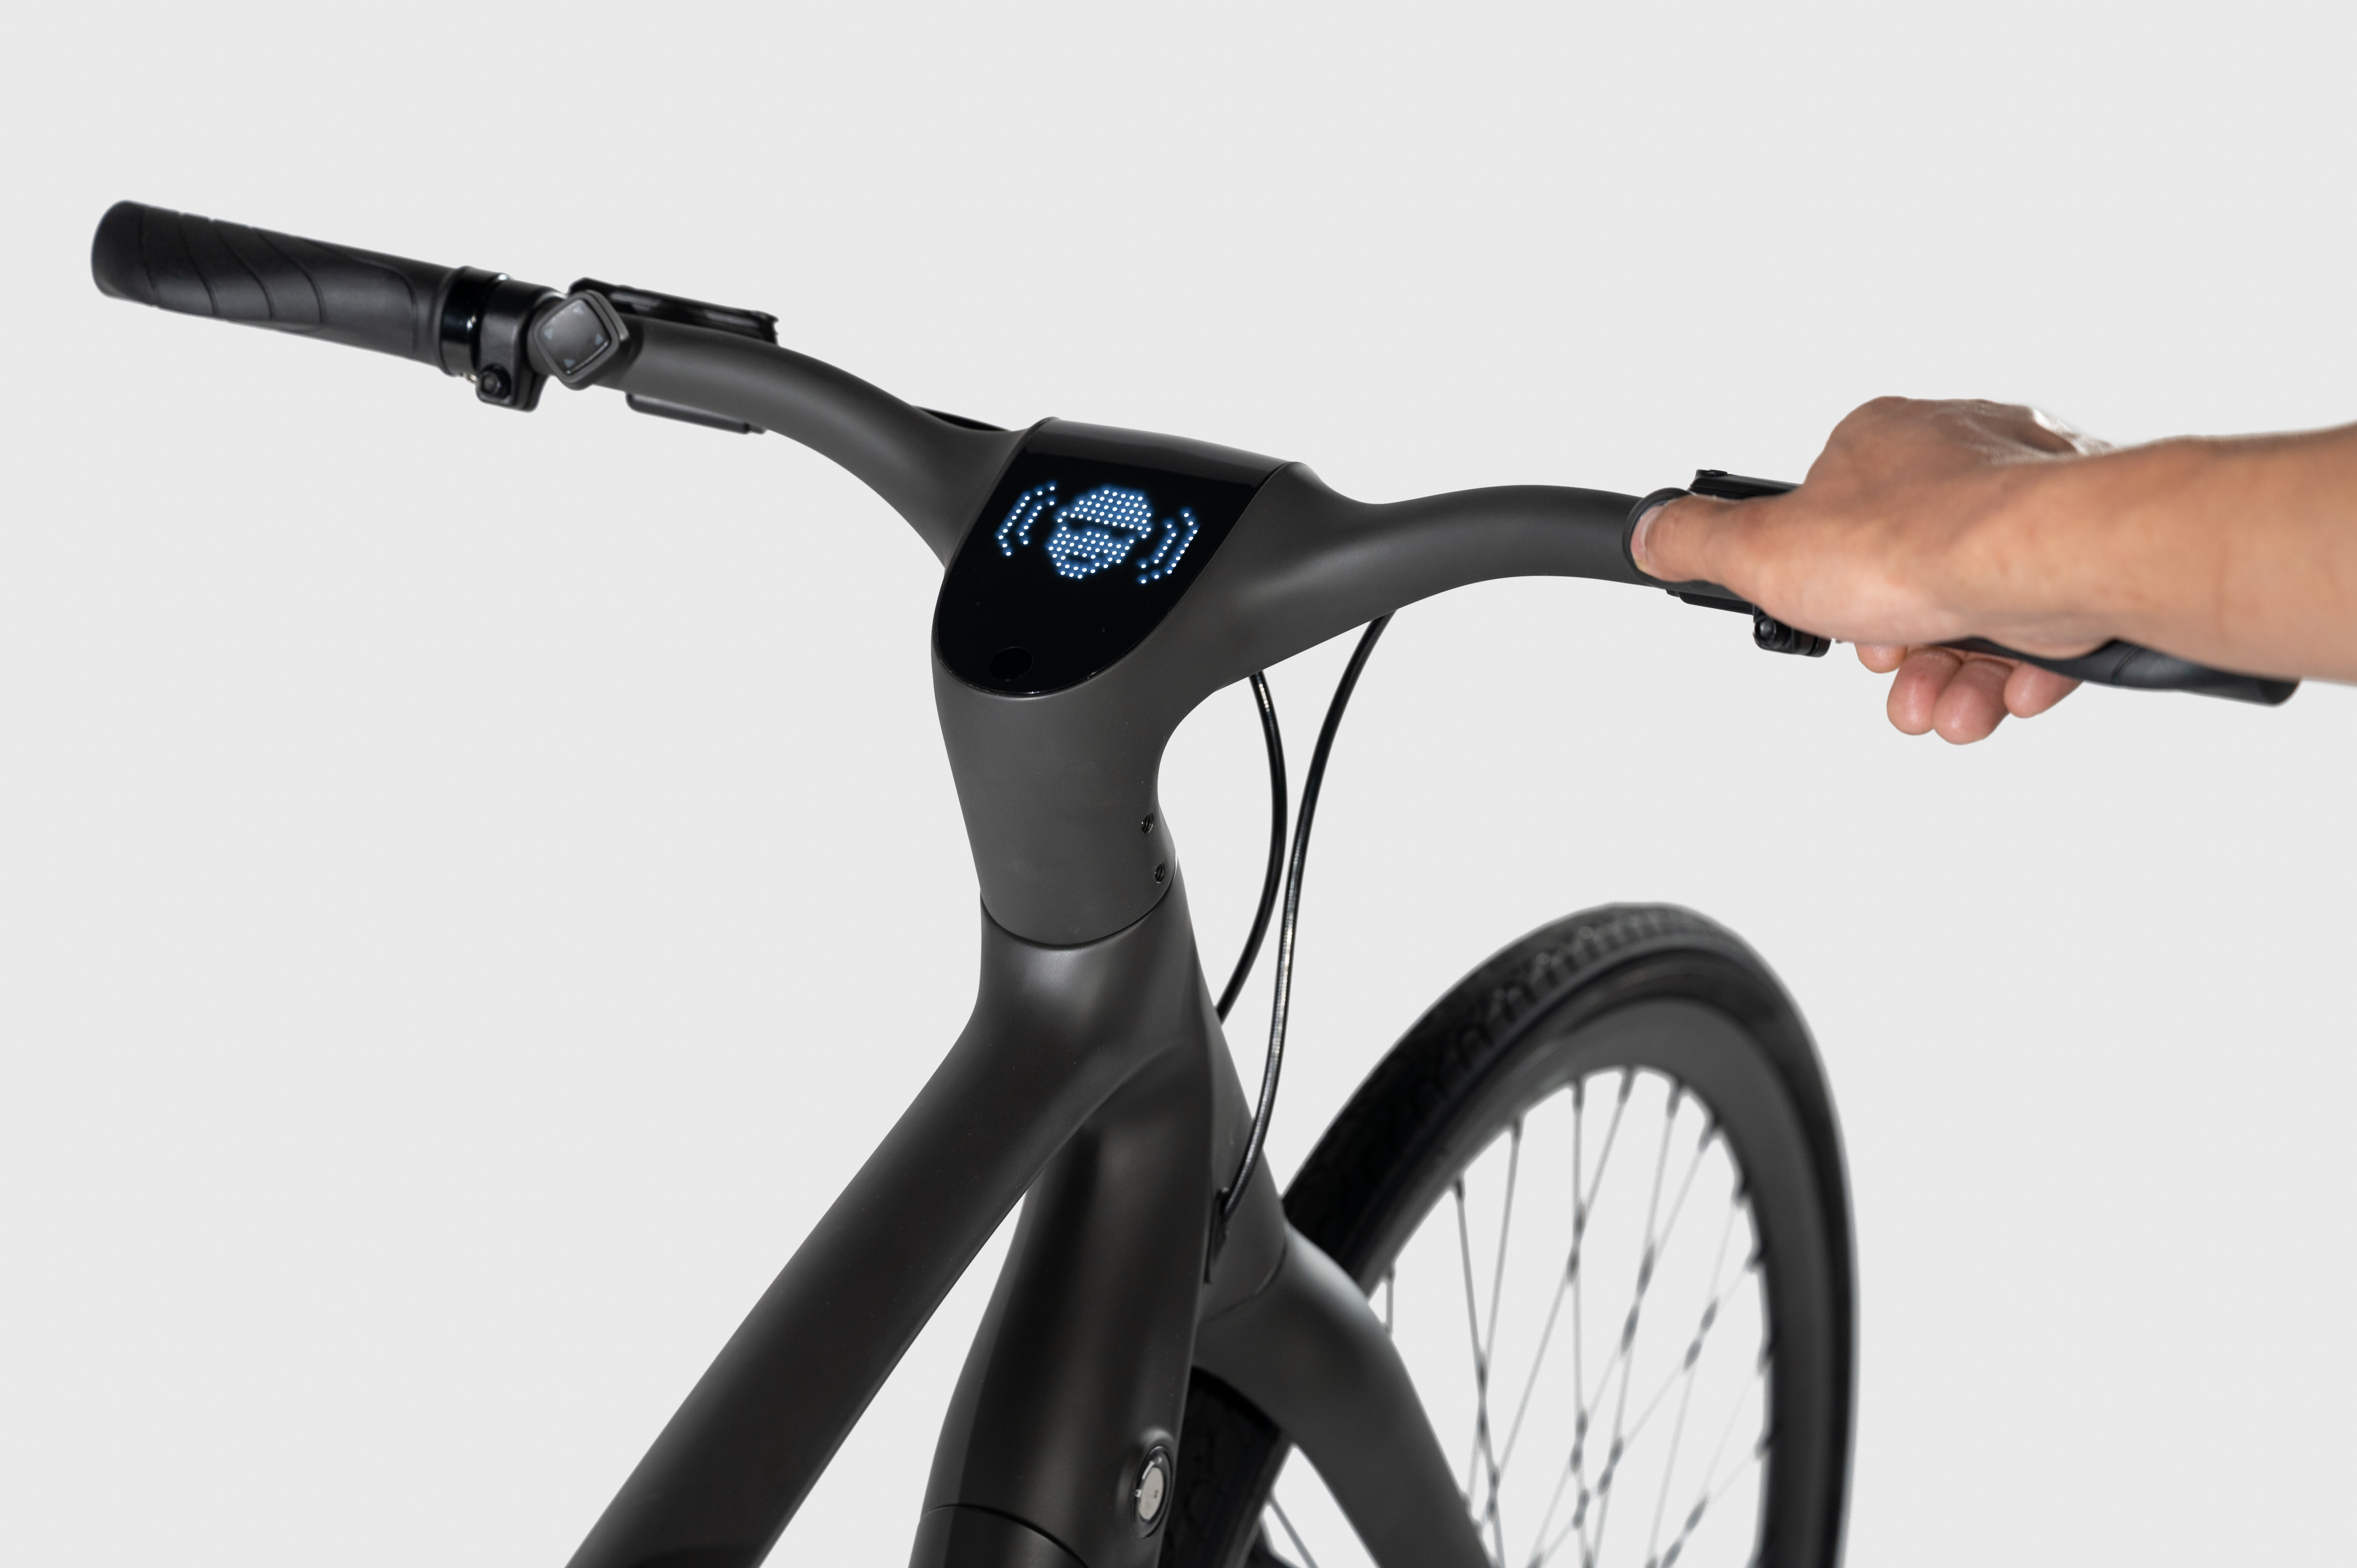 E-Bike Zoll, Unisex-Rad, mit Vanilla) Large, Wh, Akku (Laufradgröße: 29 Carbon Large 352.8 Citybike Leichtes Abnehmbaren Smart URTOPIA